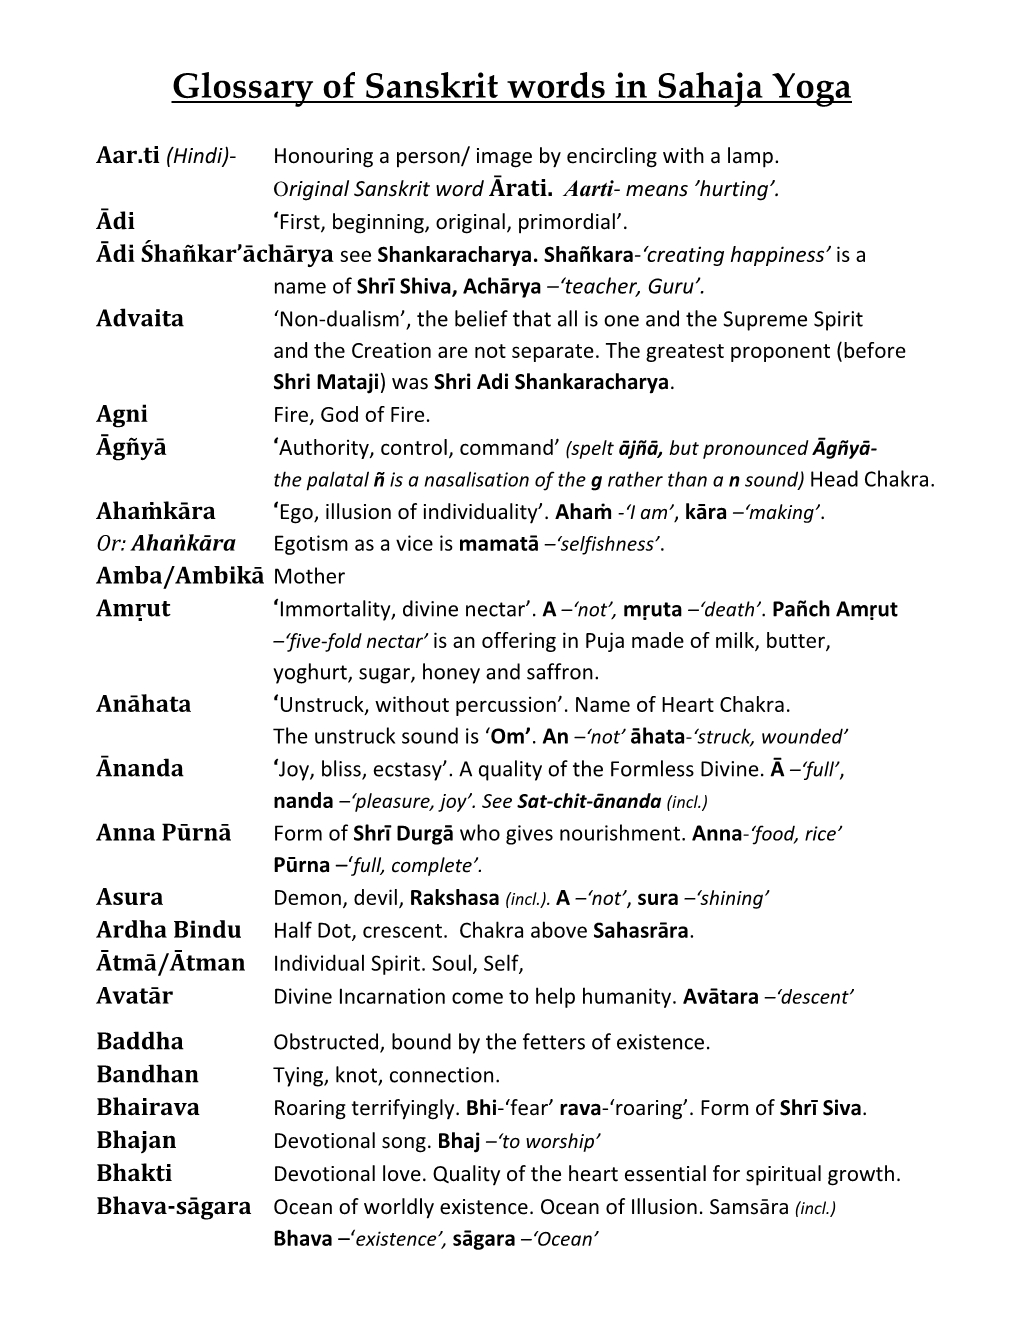 Glossary of Sanskrit Words in Sahaja Yoga